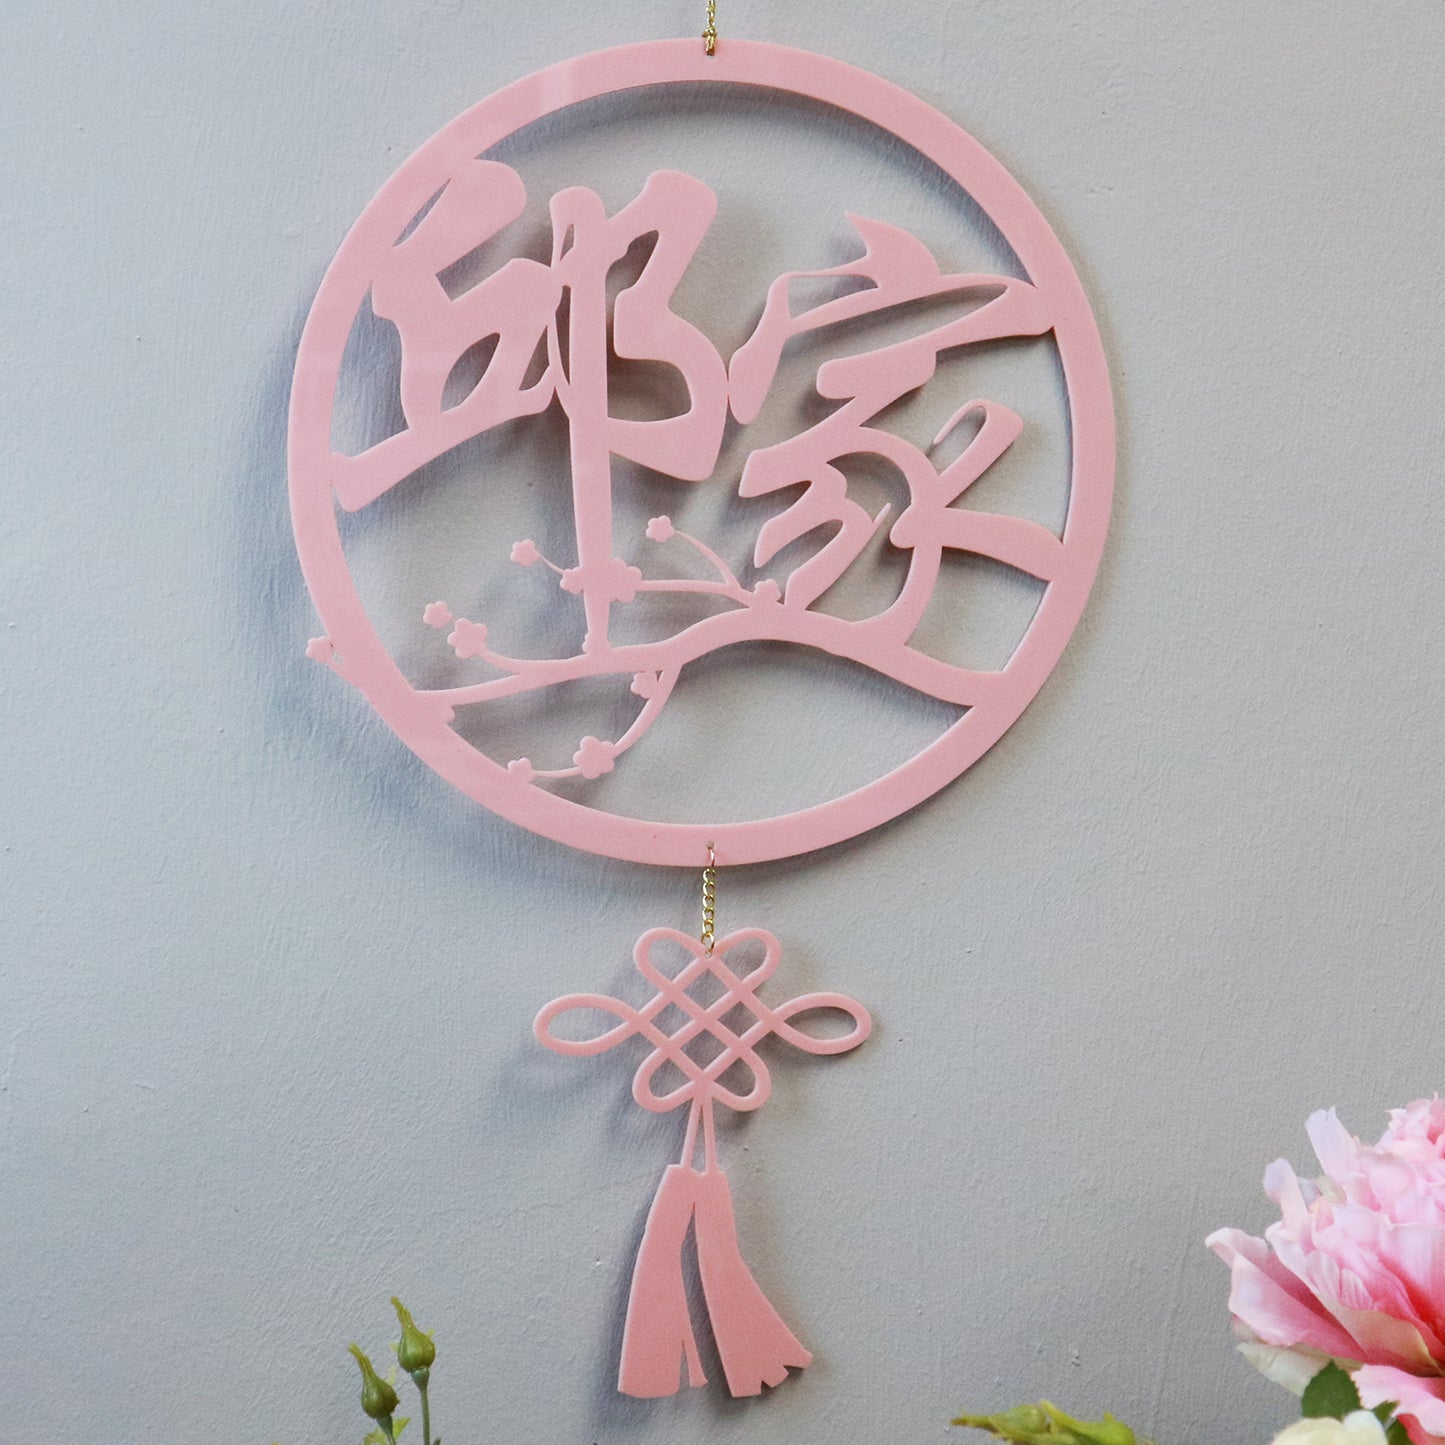 CNY Emblem Hanging Decor - Blossoms